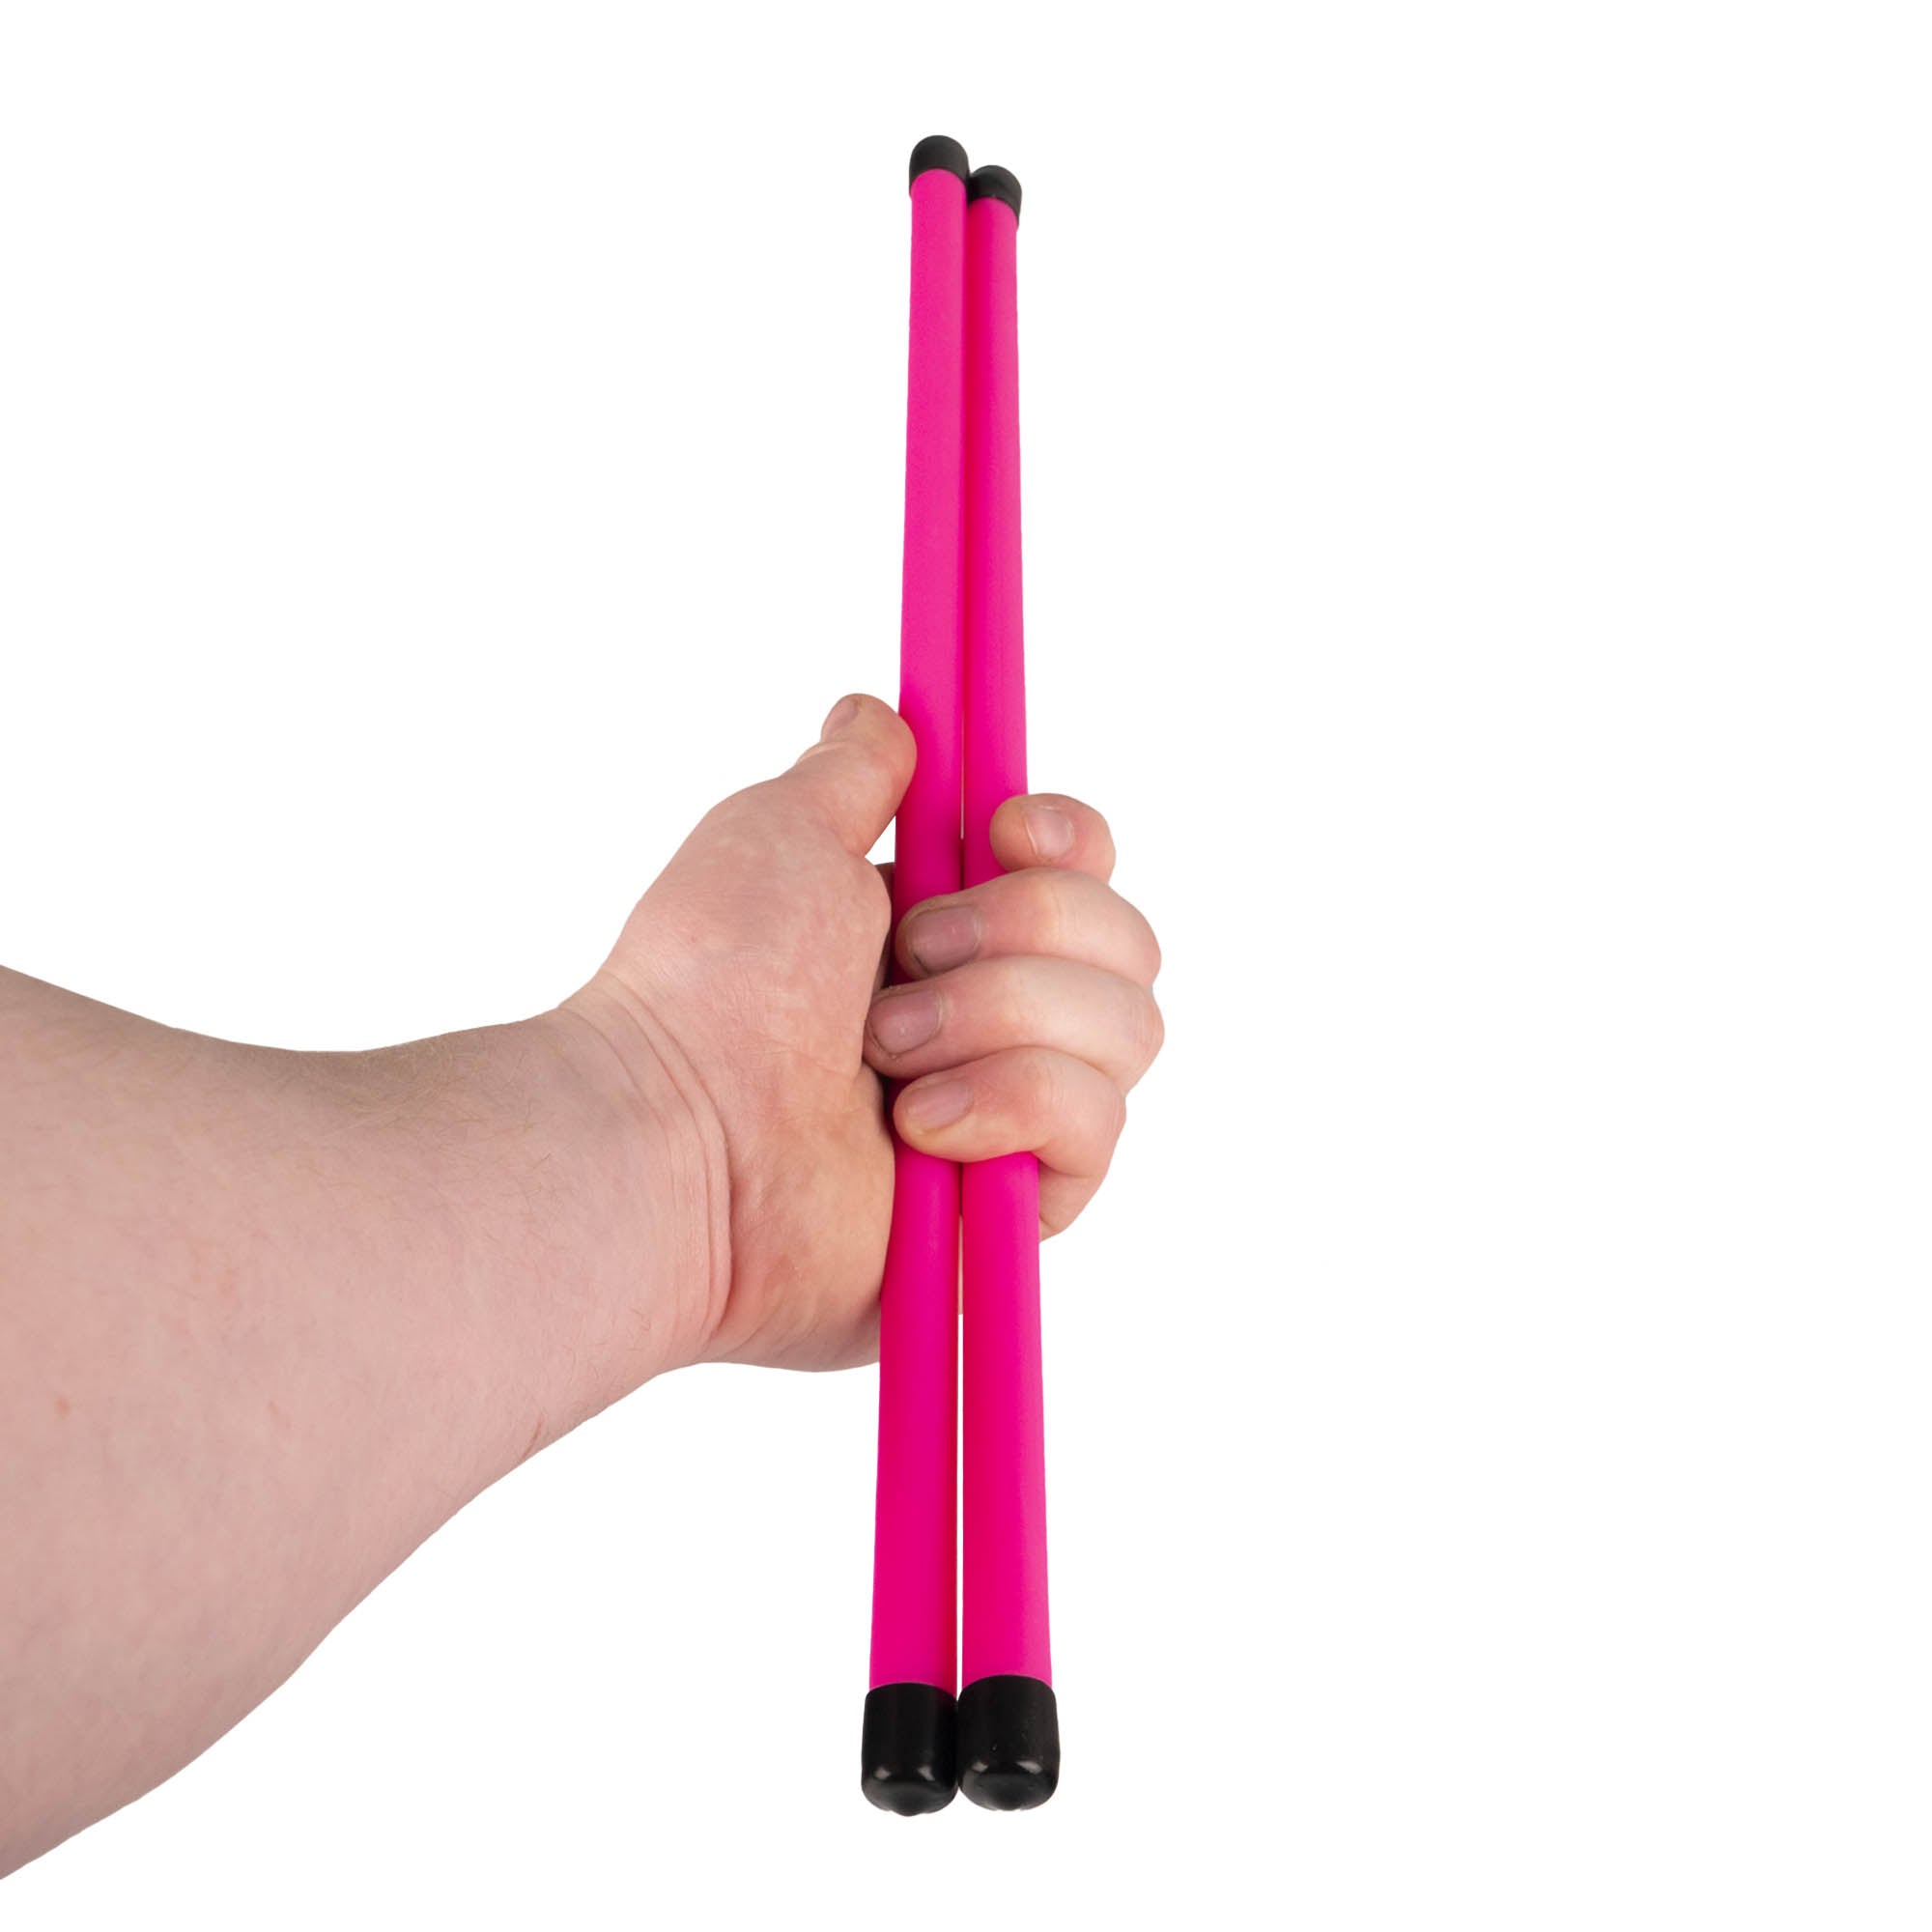 Pair of UV pink devilstick handsticks in hand